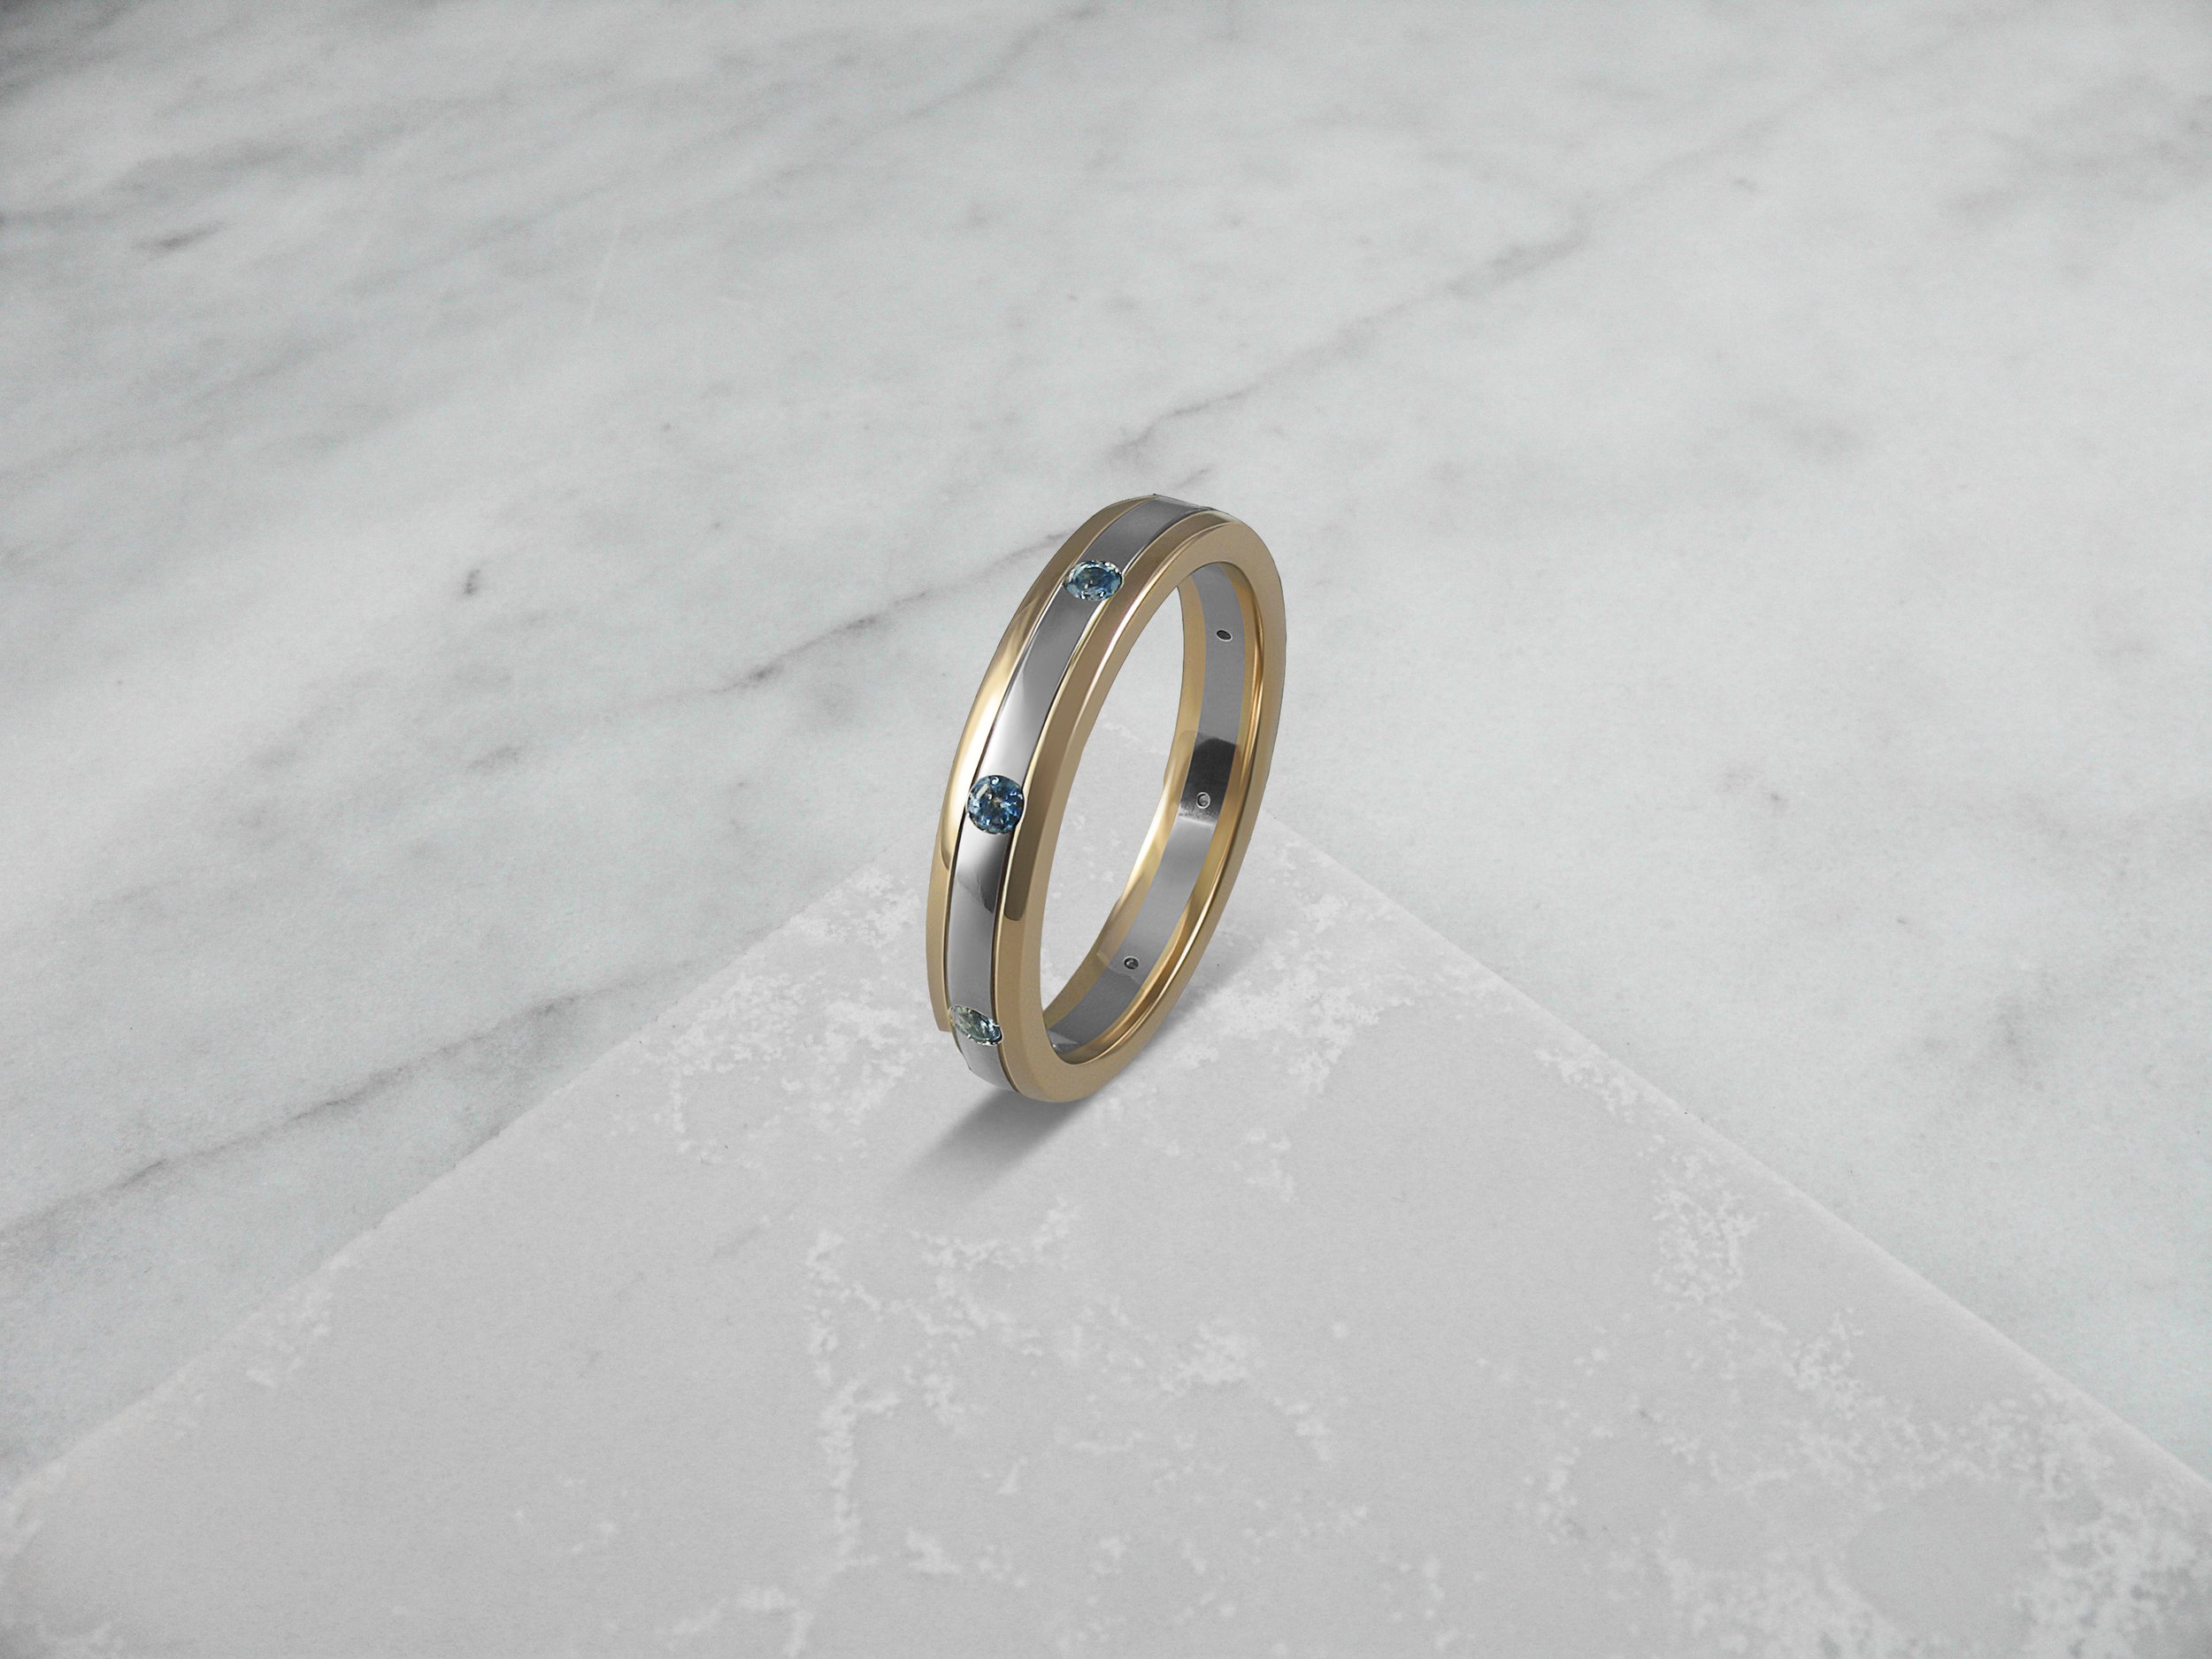 Aquamarine men's wedding ring